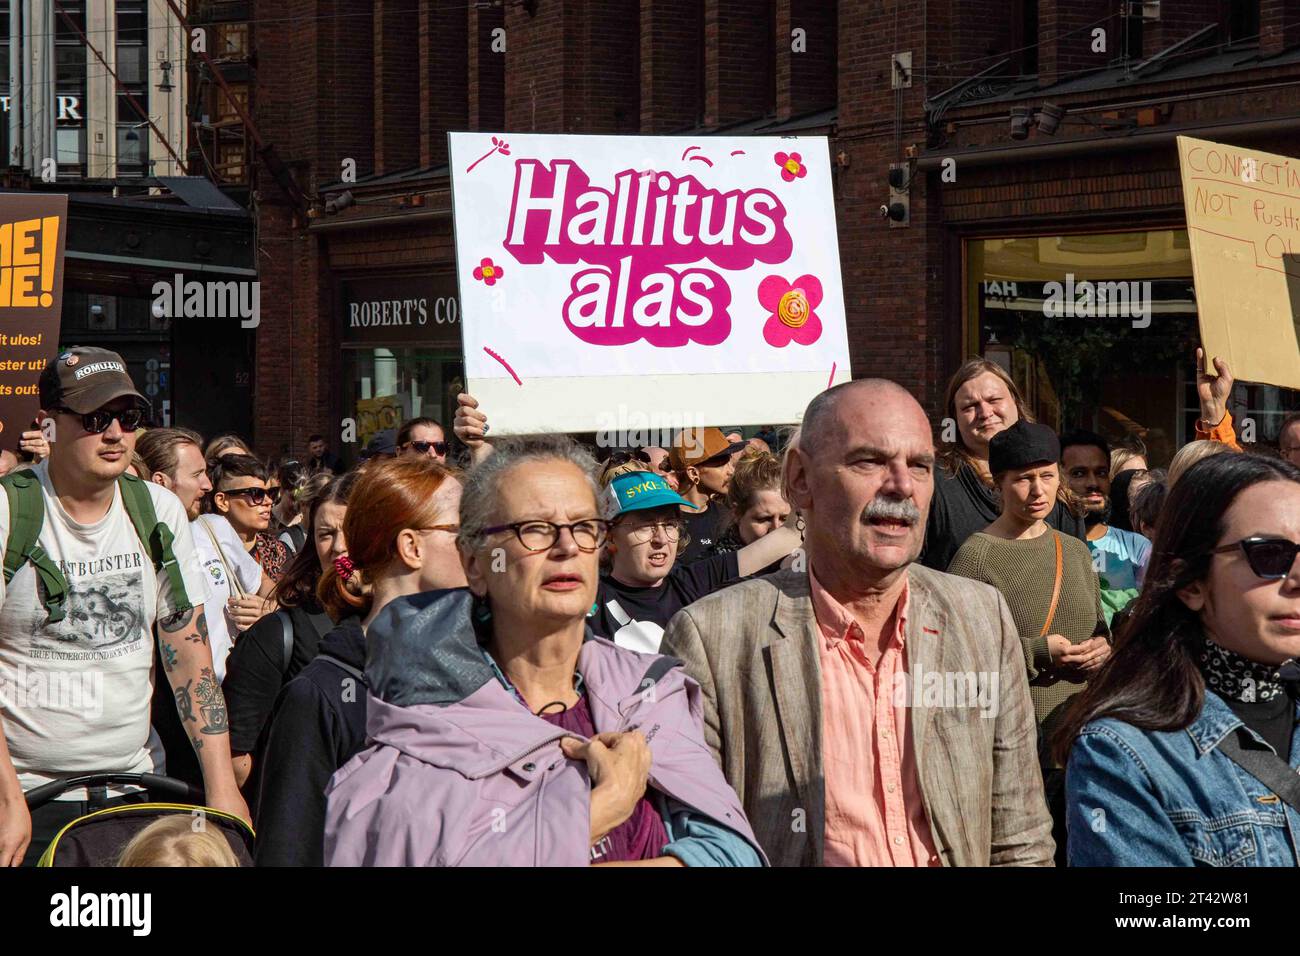 Hallitus alas. Protesters marching on Aleksanterinkatu at Me emme vaikene! anti-racism demonstration in Helsinki, Finland. Stock Photo